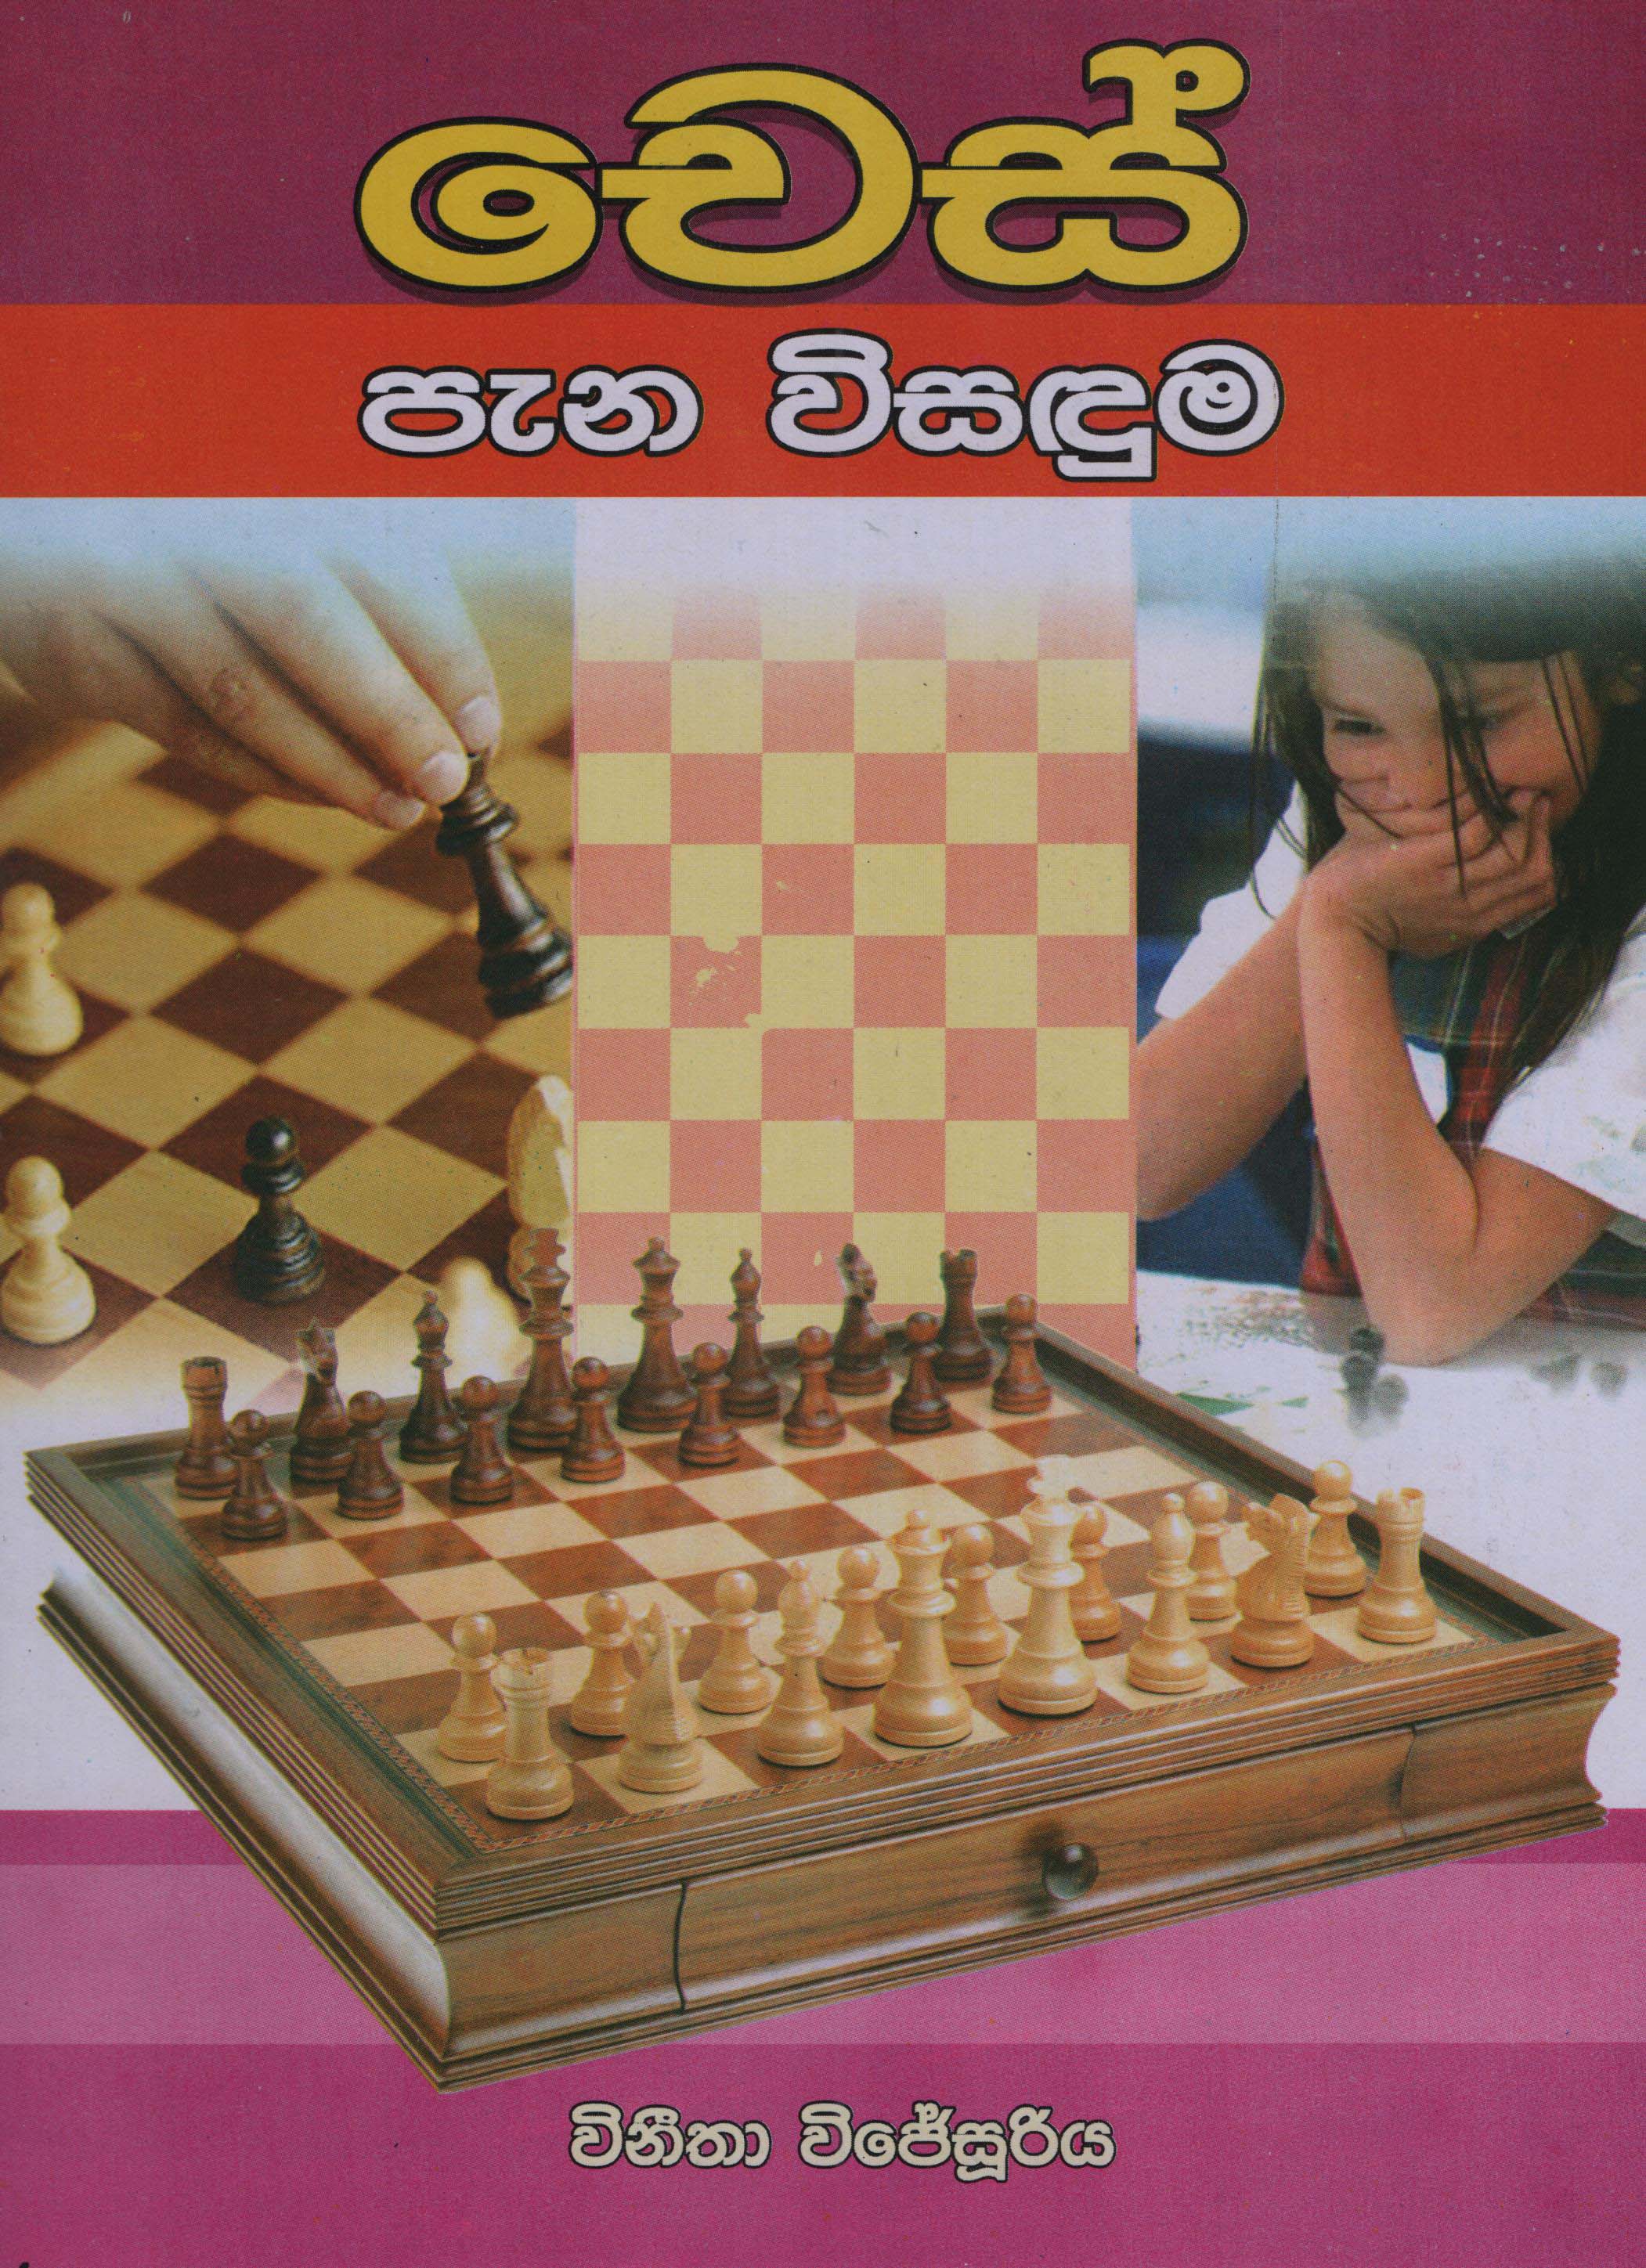 Chess Pena Visadamu